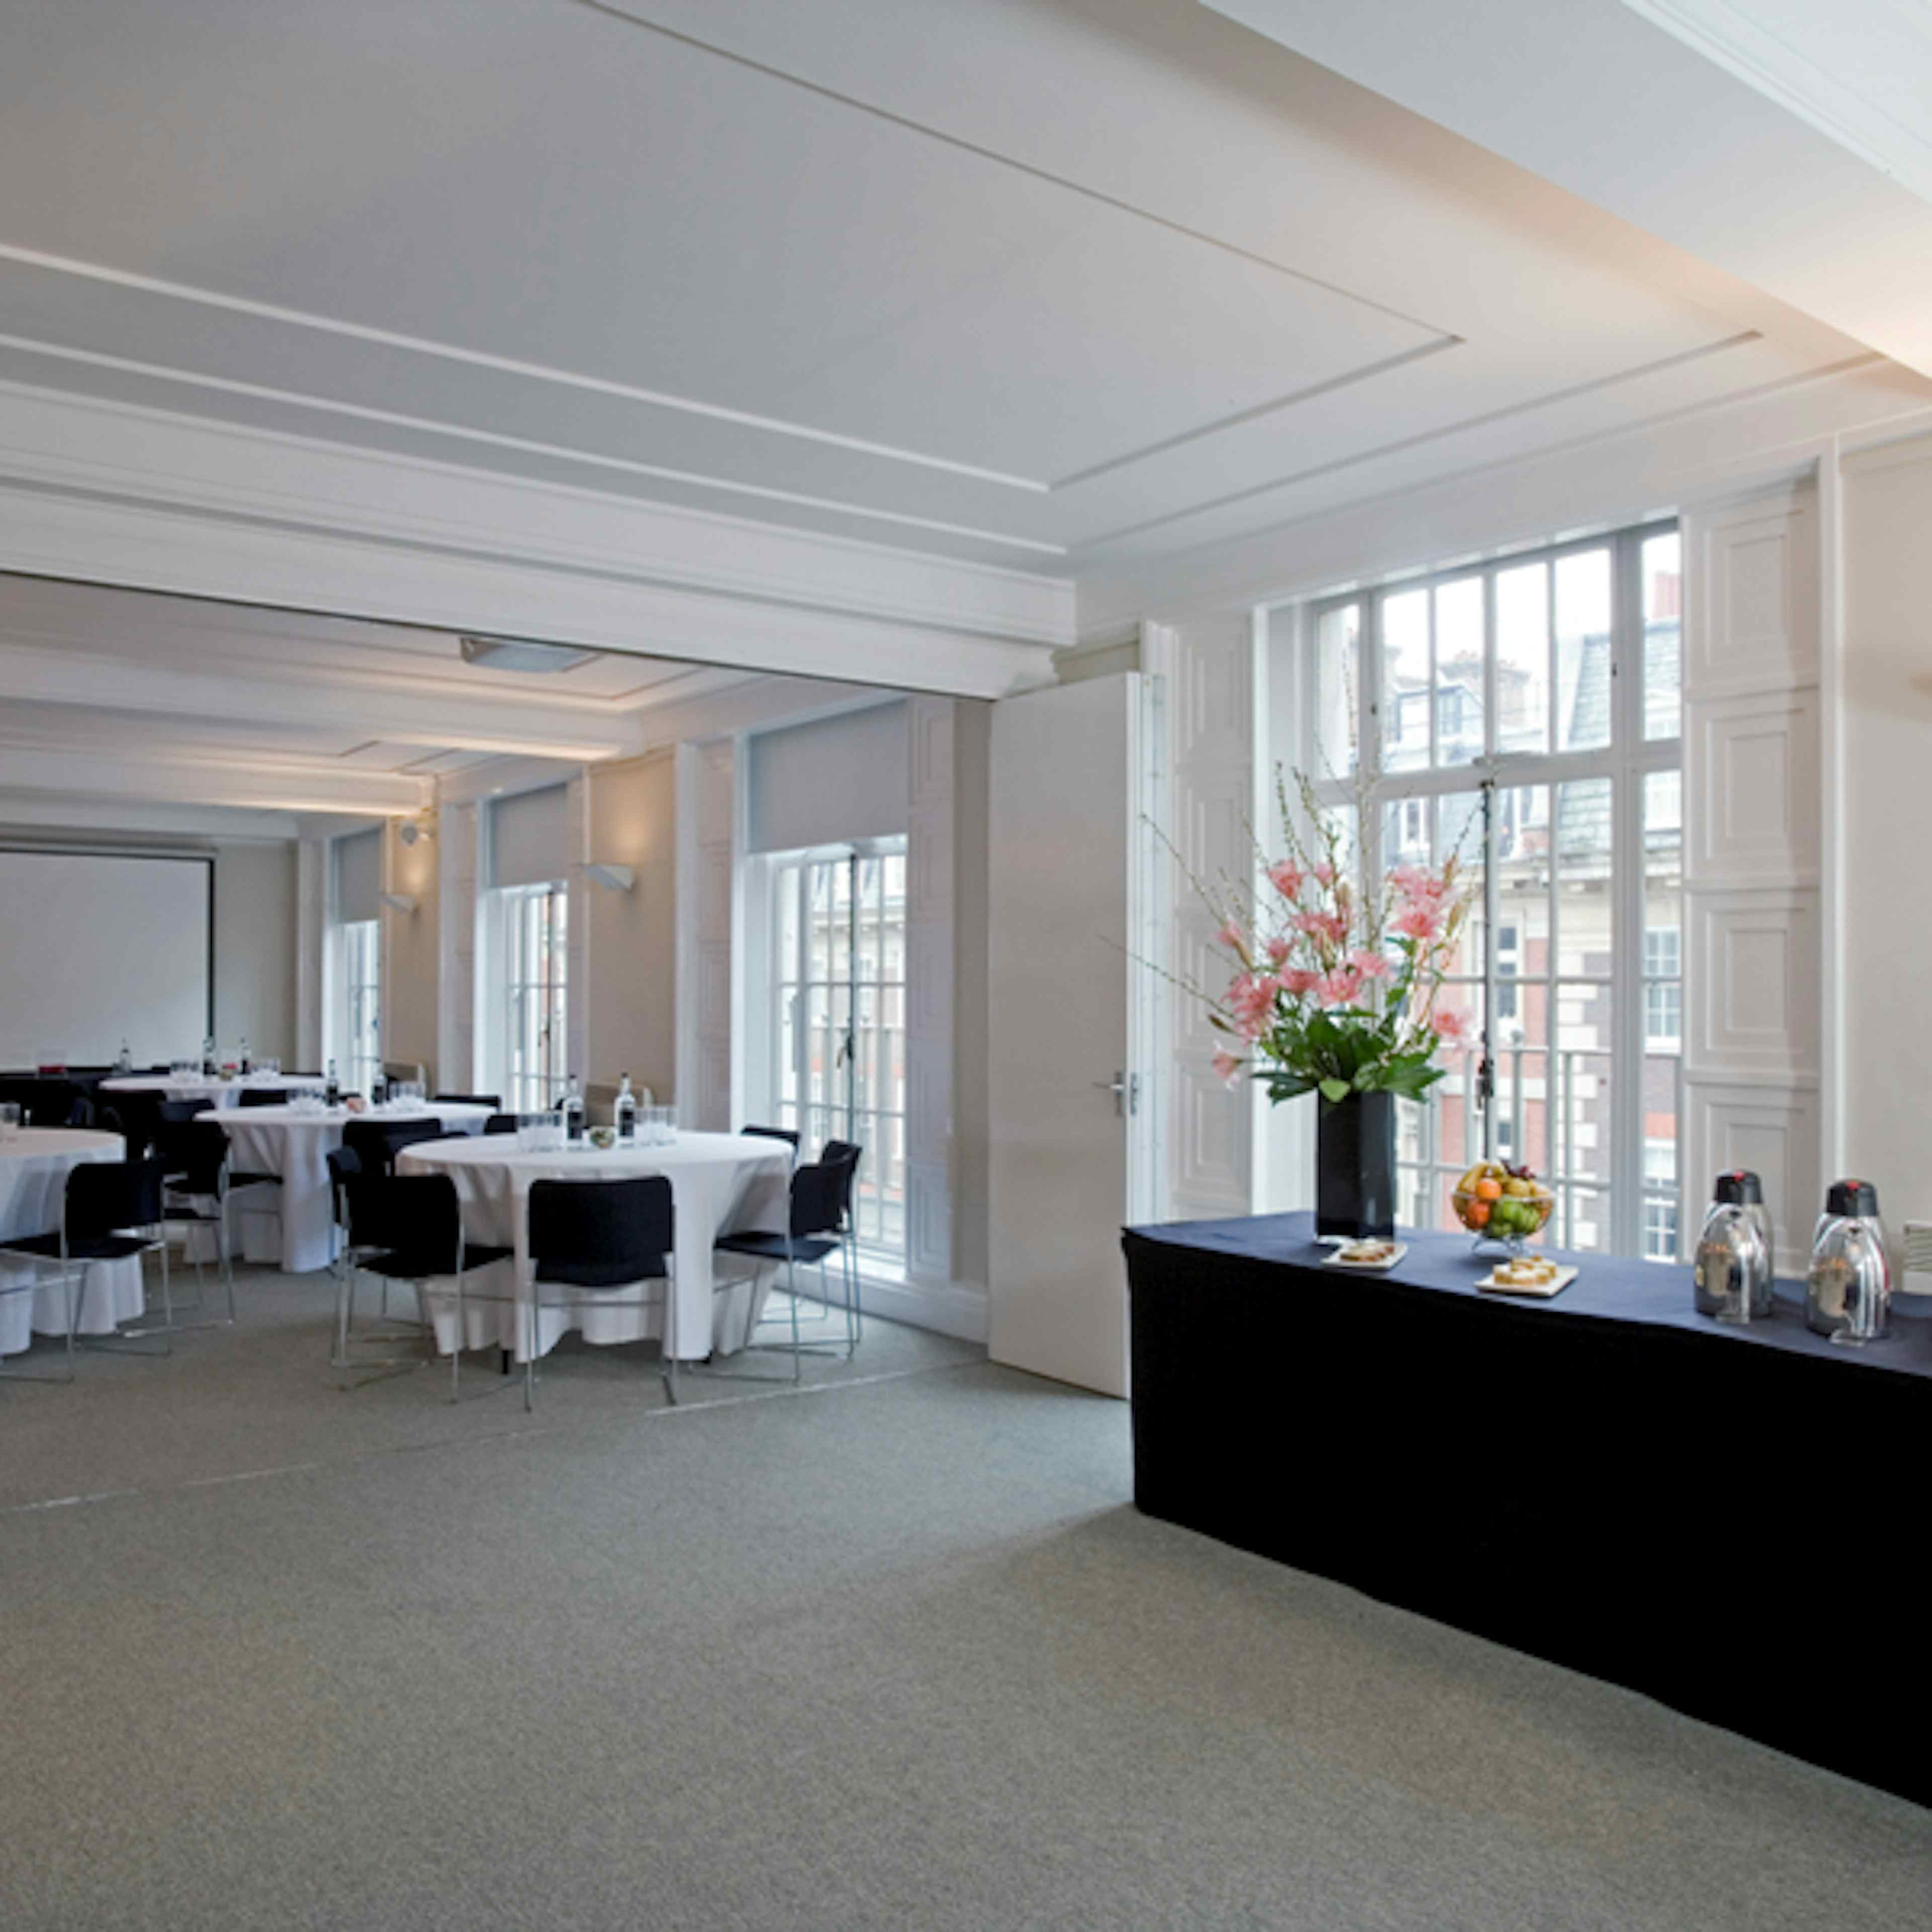 The Royal Institute of British Architects (RIBA) - Lutyens Room image 3